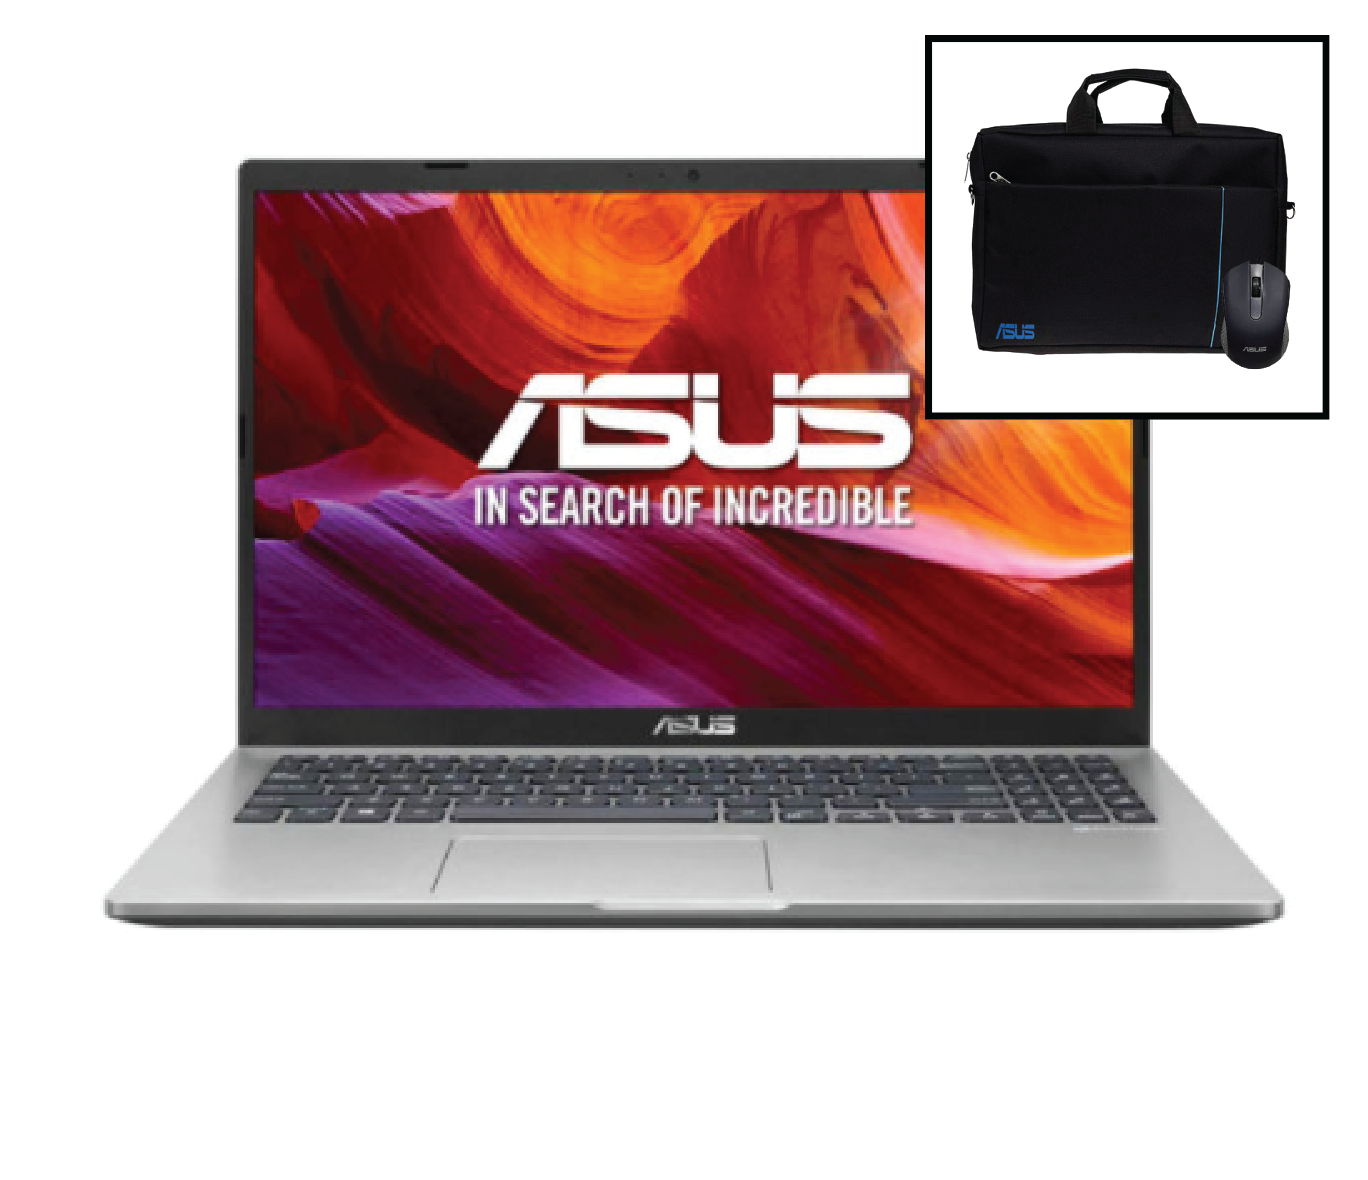 لپ تاپ ایسوس 15 اینچ 620 Asus VivoBook R521MA : Pentium N5000 / 4GB RAM / 1TB HDD / Intel thumb 622